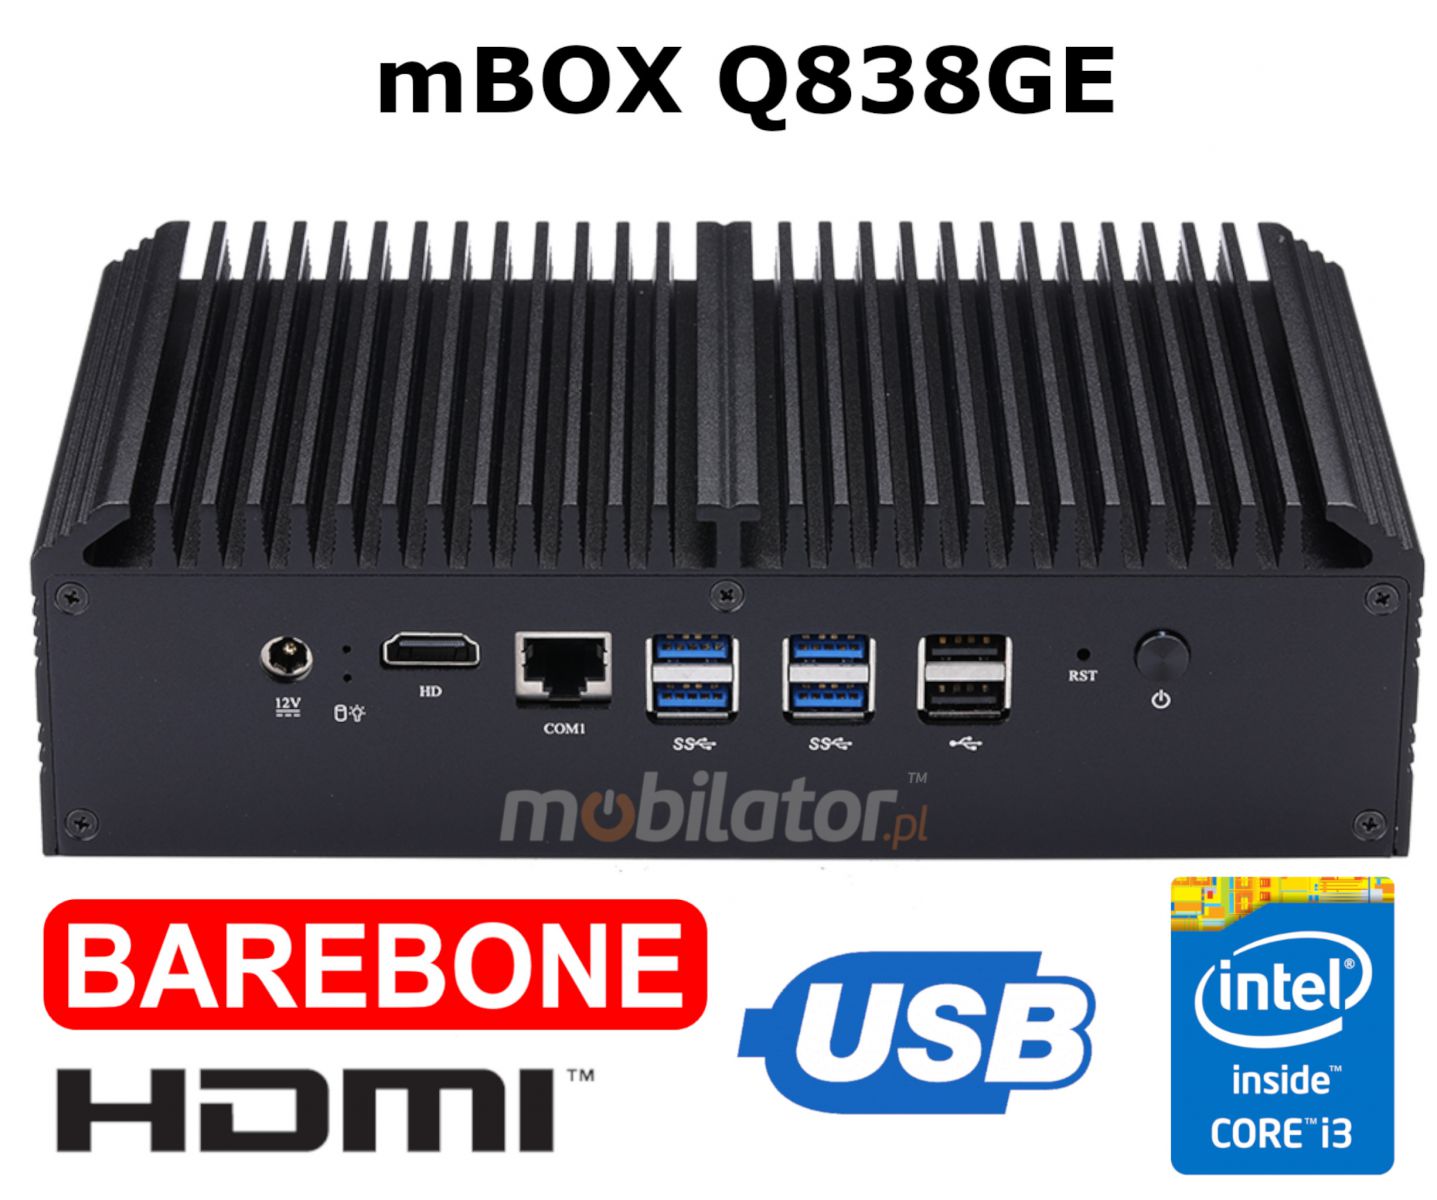 mBOX Q838GE barebone, HDMI, Intel CORE i3